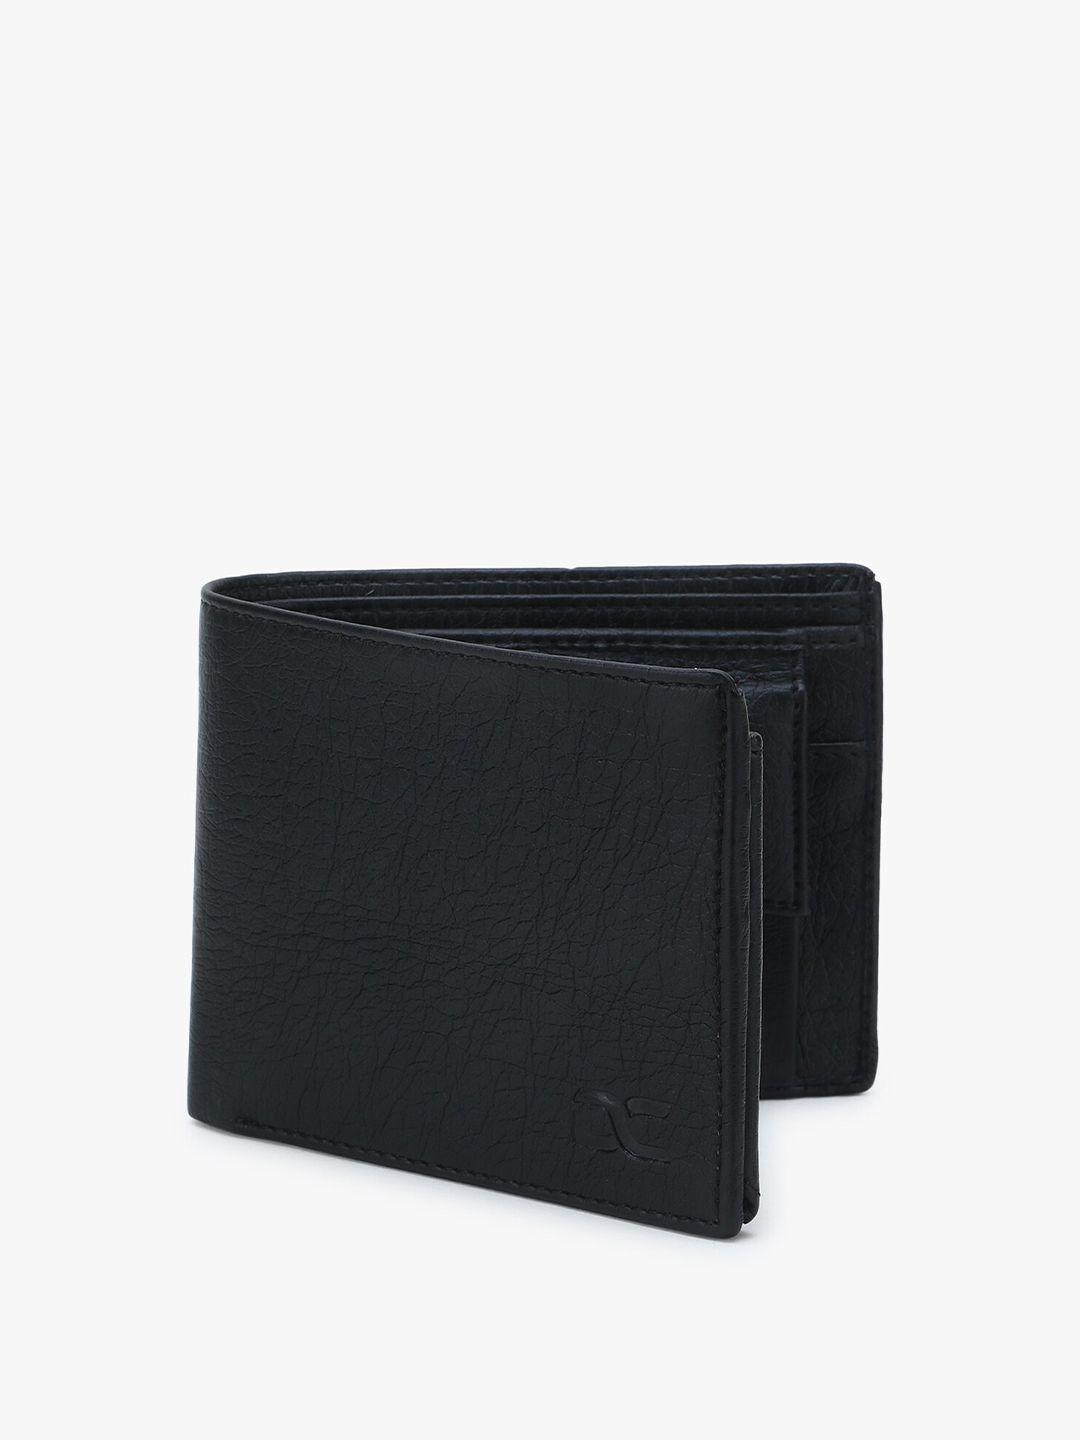 dezire crafts men black bi-fold leather two fold wallet